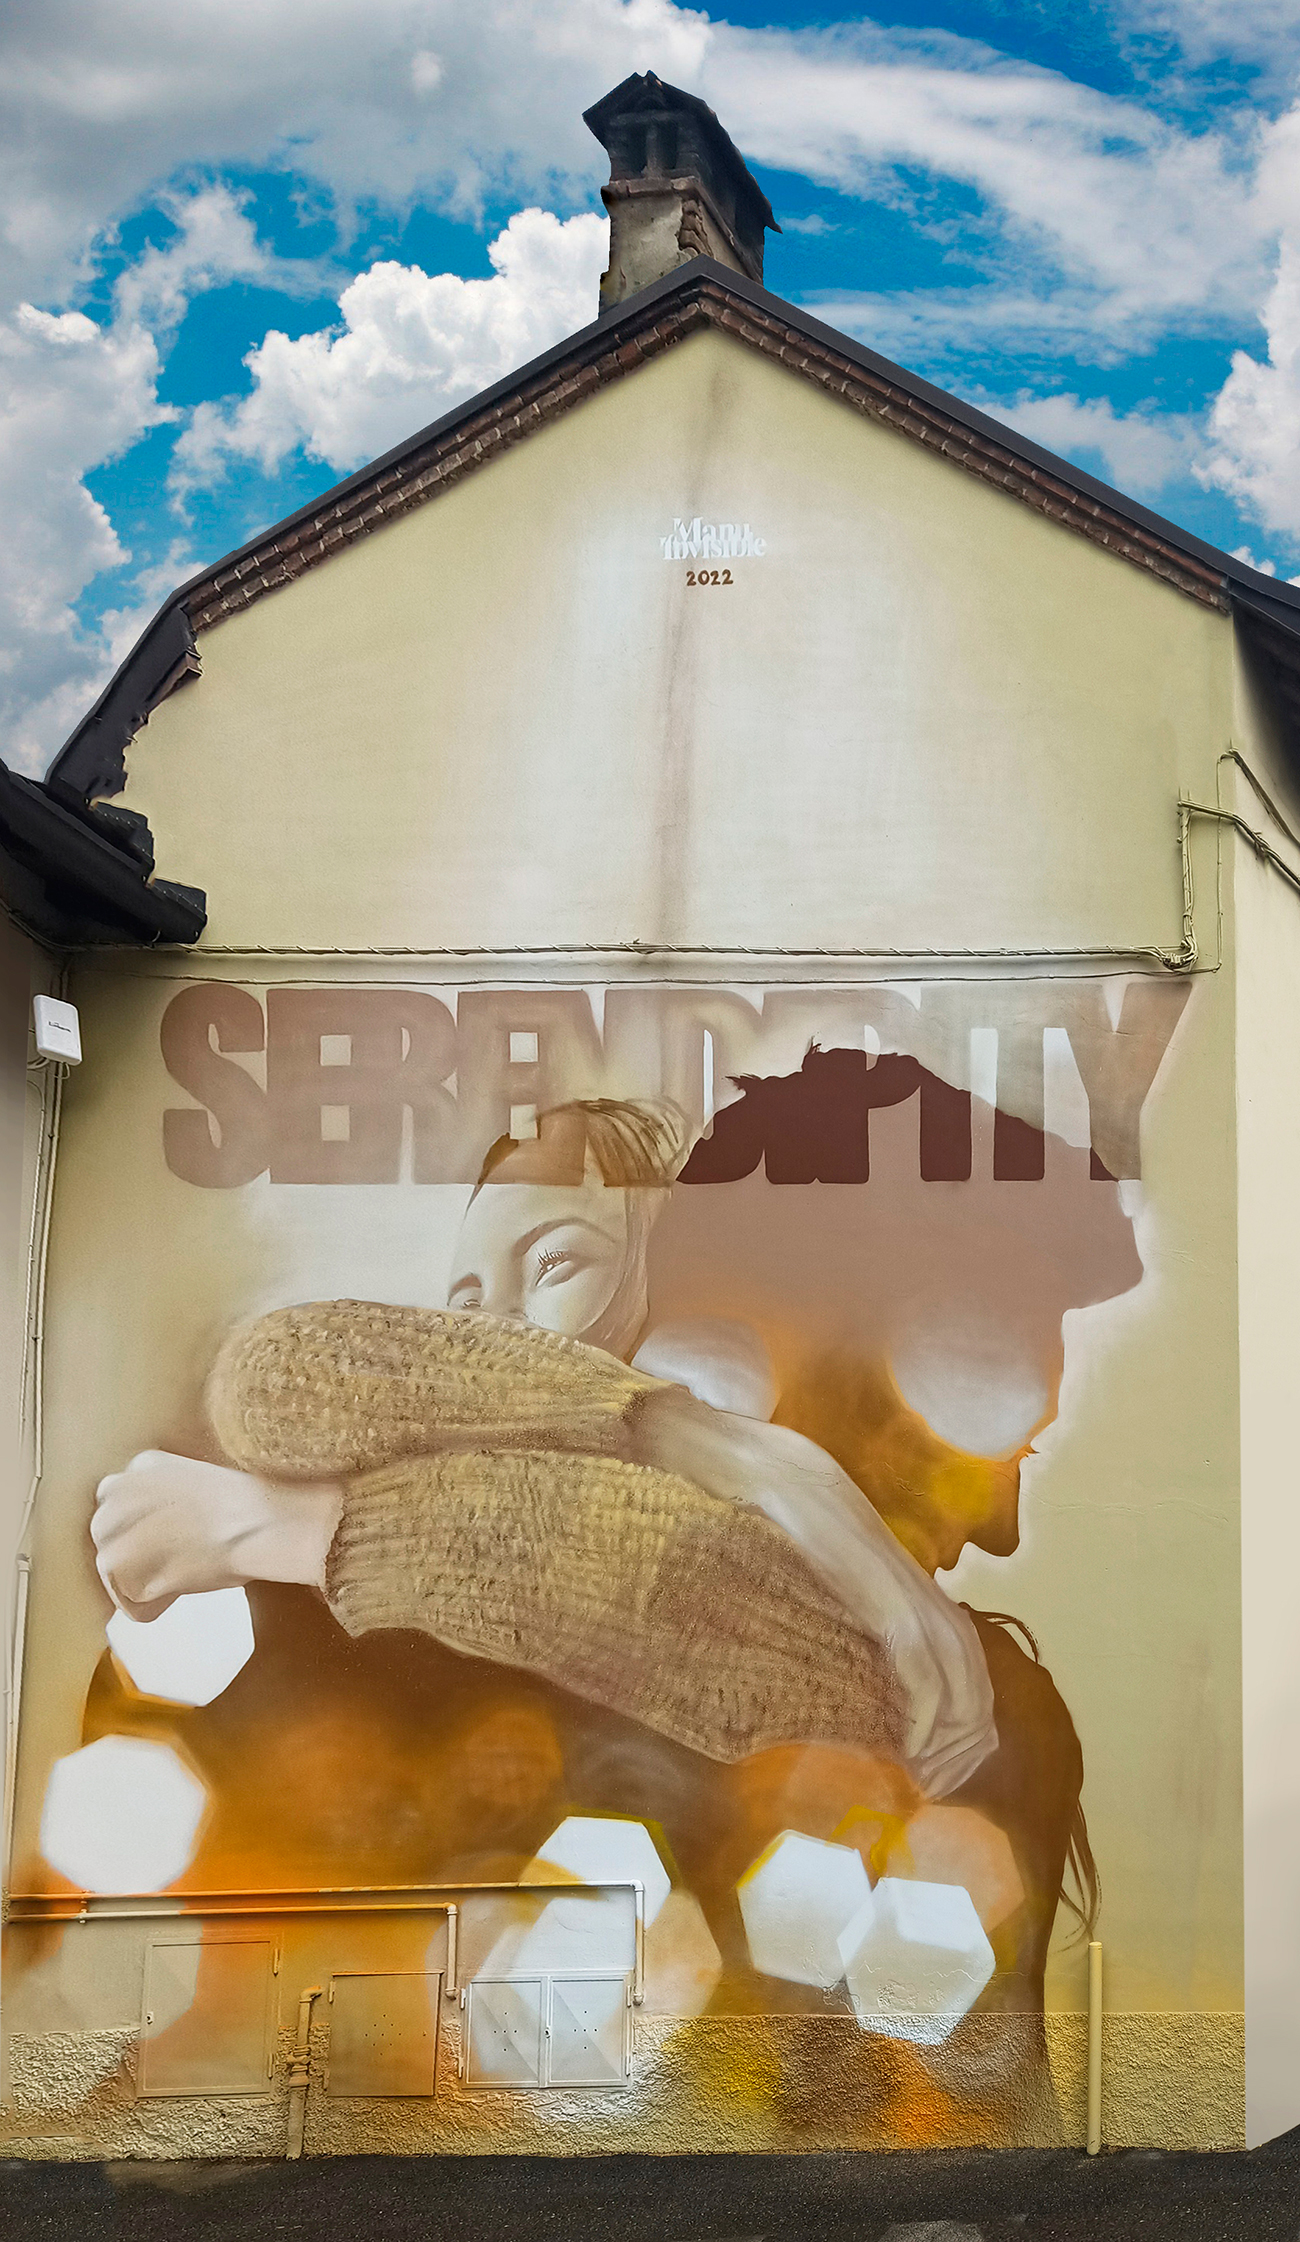 ''Serendipity'' Quartz et spray au mur 42 mq Osnago 2022